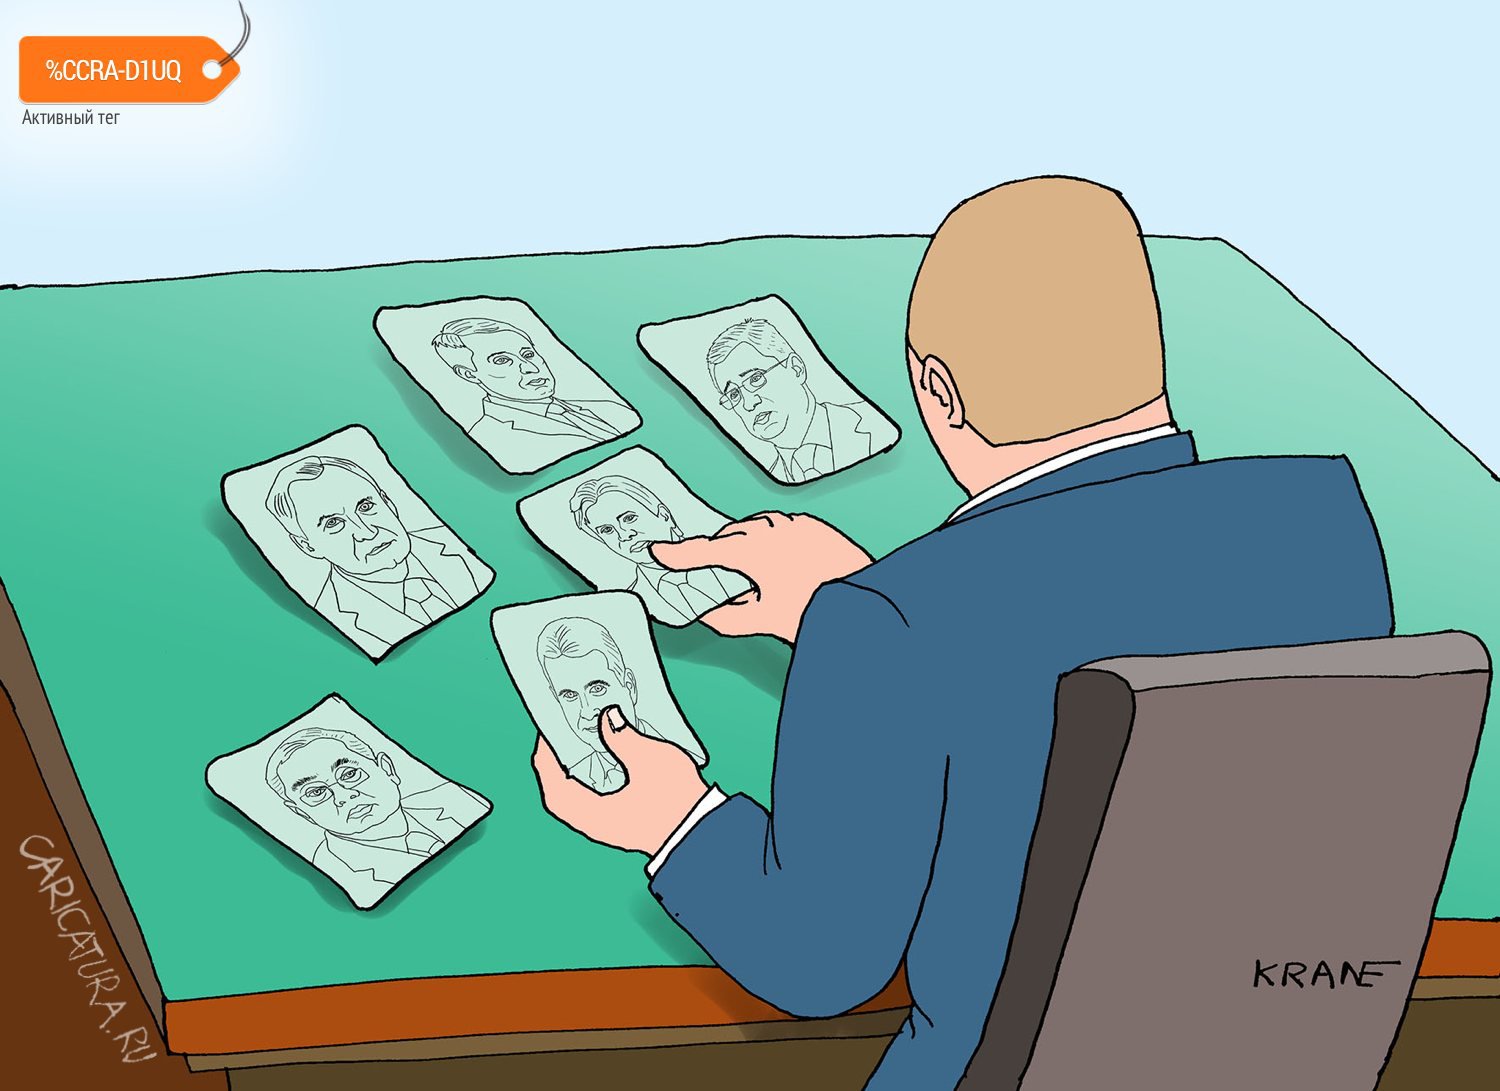 Карикатура "Путин встряхнул правительство", Евгений Кран